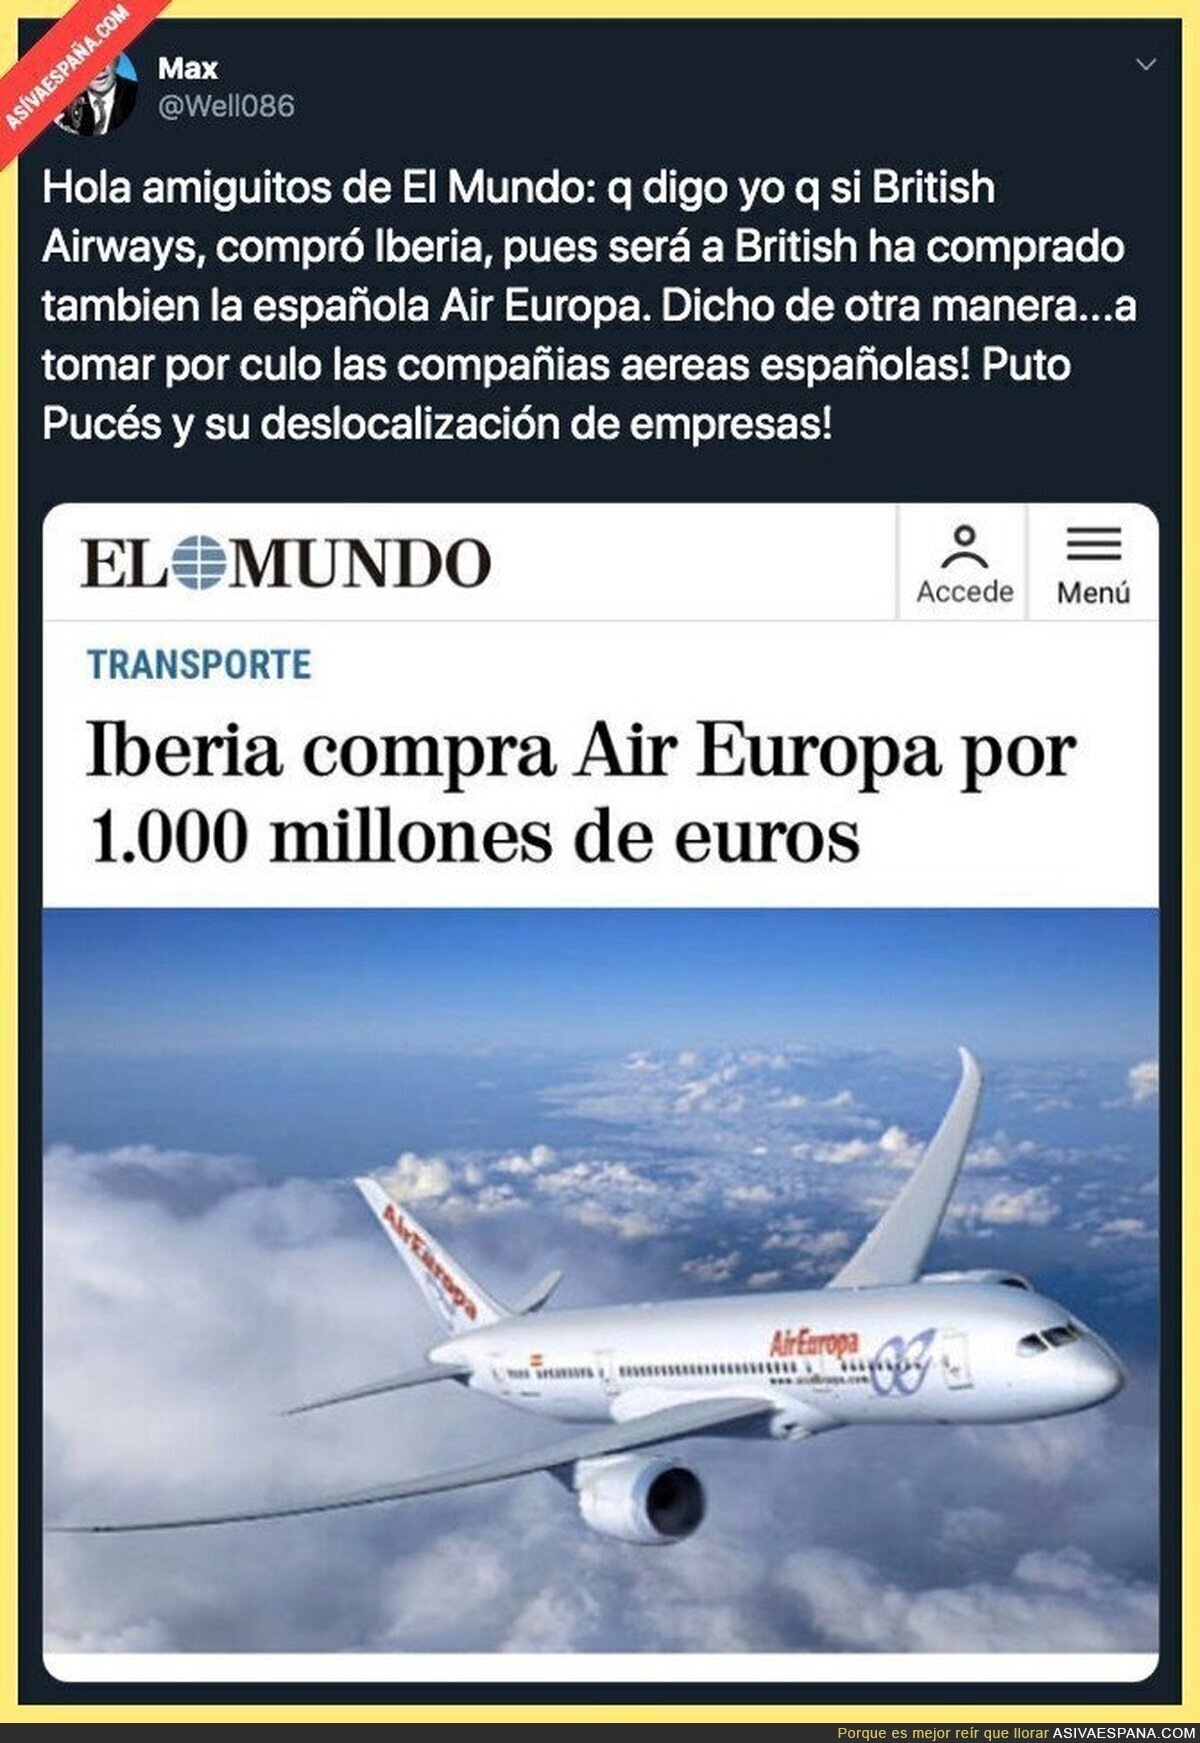 Adiós a las empresas aéreas españolas